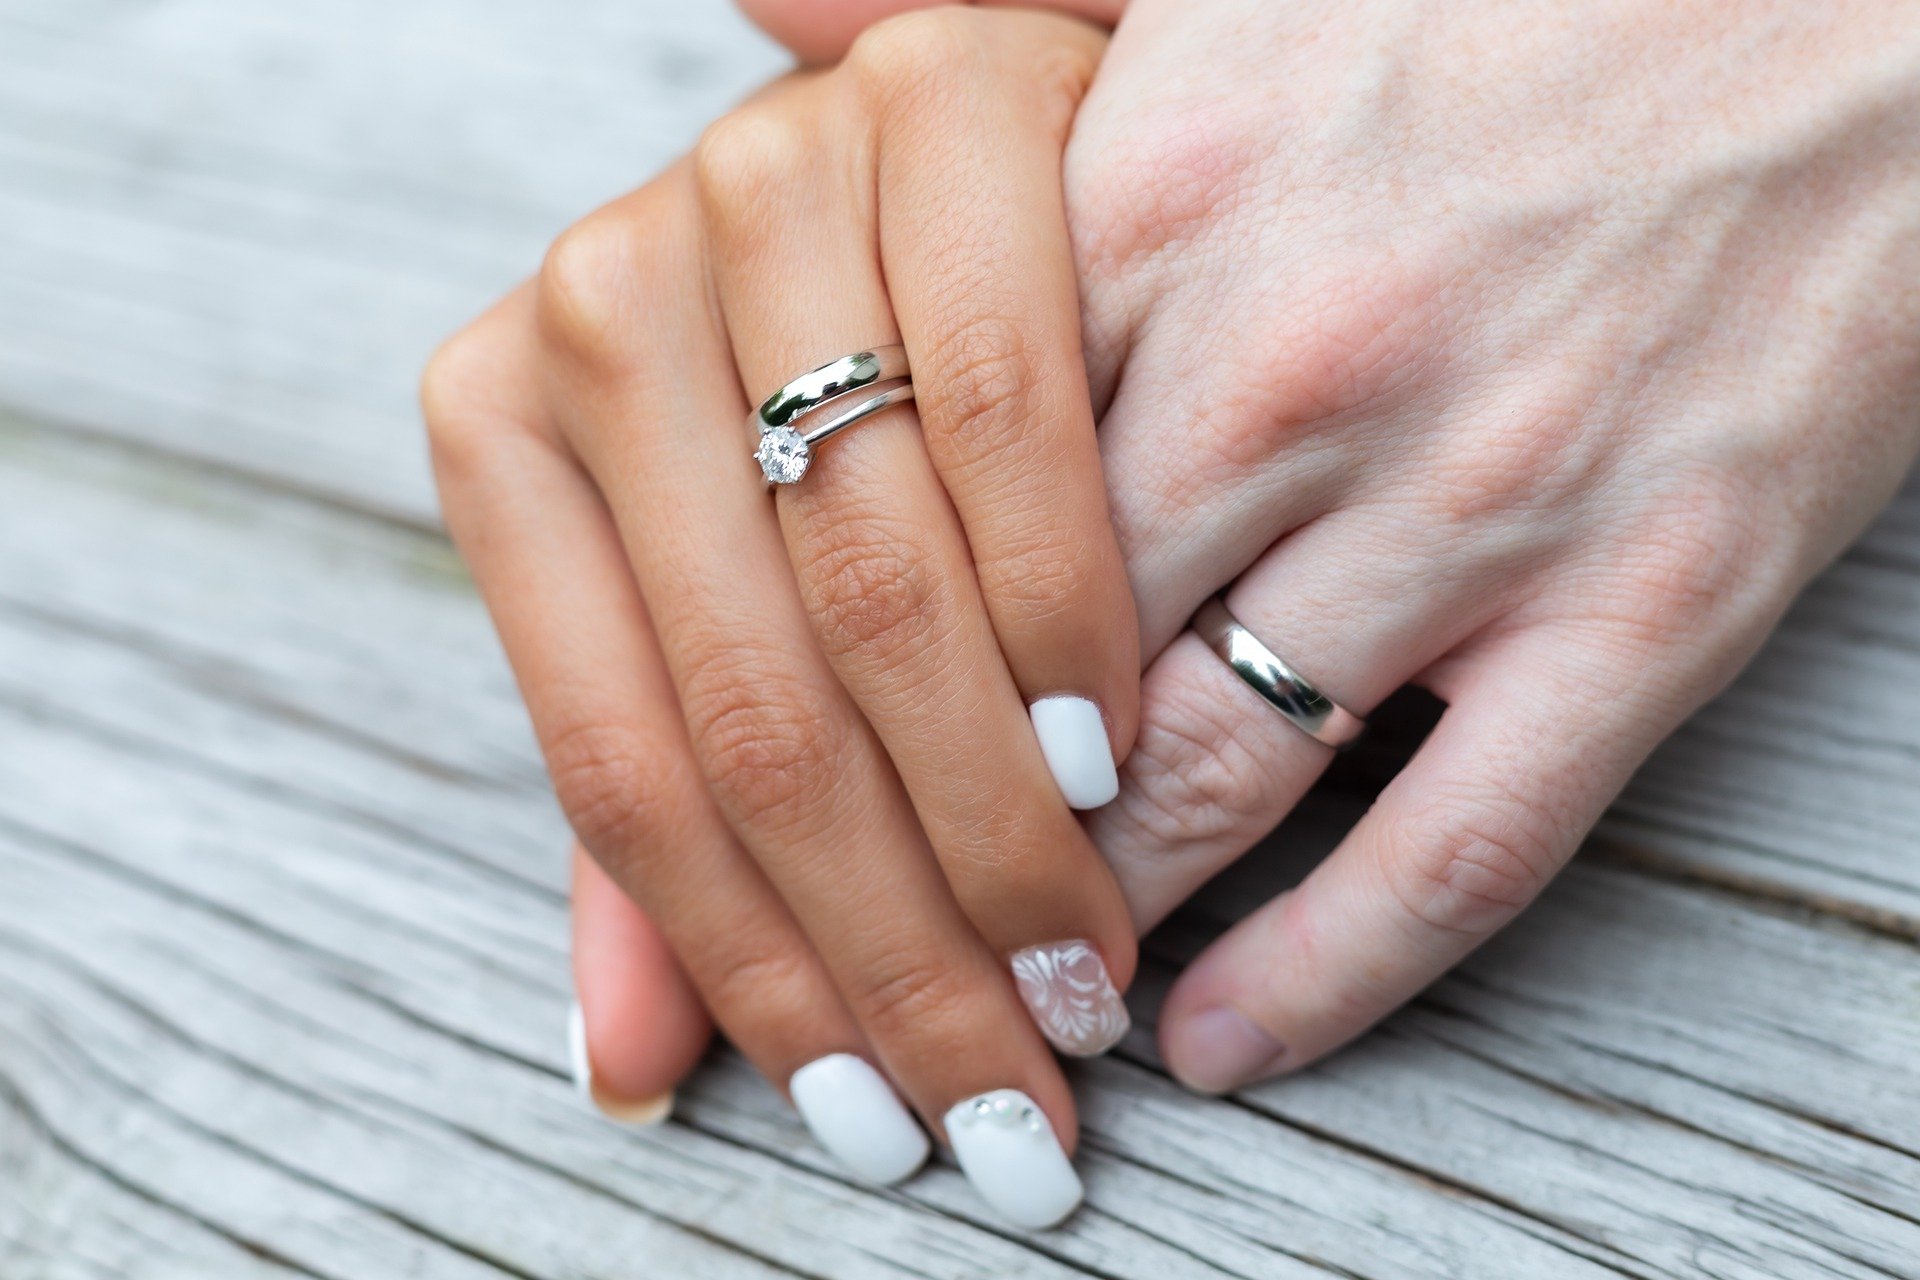 Можно ли серебряное обручальное кольцо. Обручальное и помолвочное кольцо. Обручальные кольца на руках. Помолвочное и обручальное кольцо на пальце. Обручальное и помолвочное кольцо вместе.